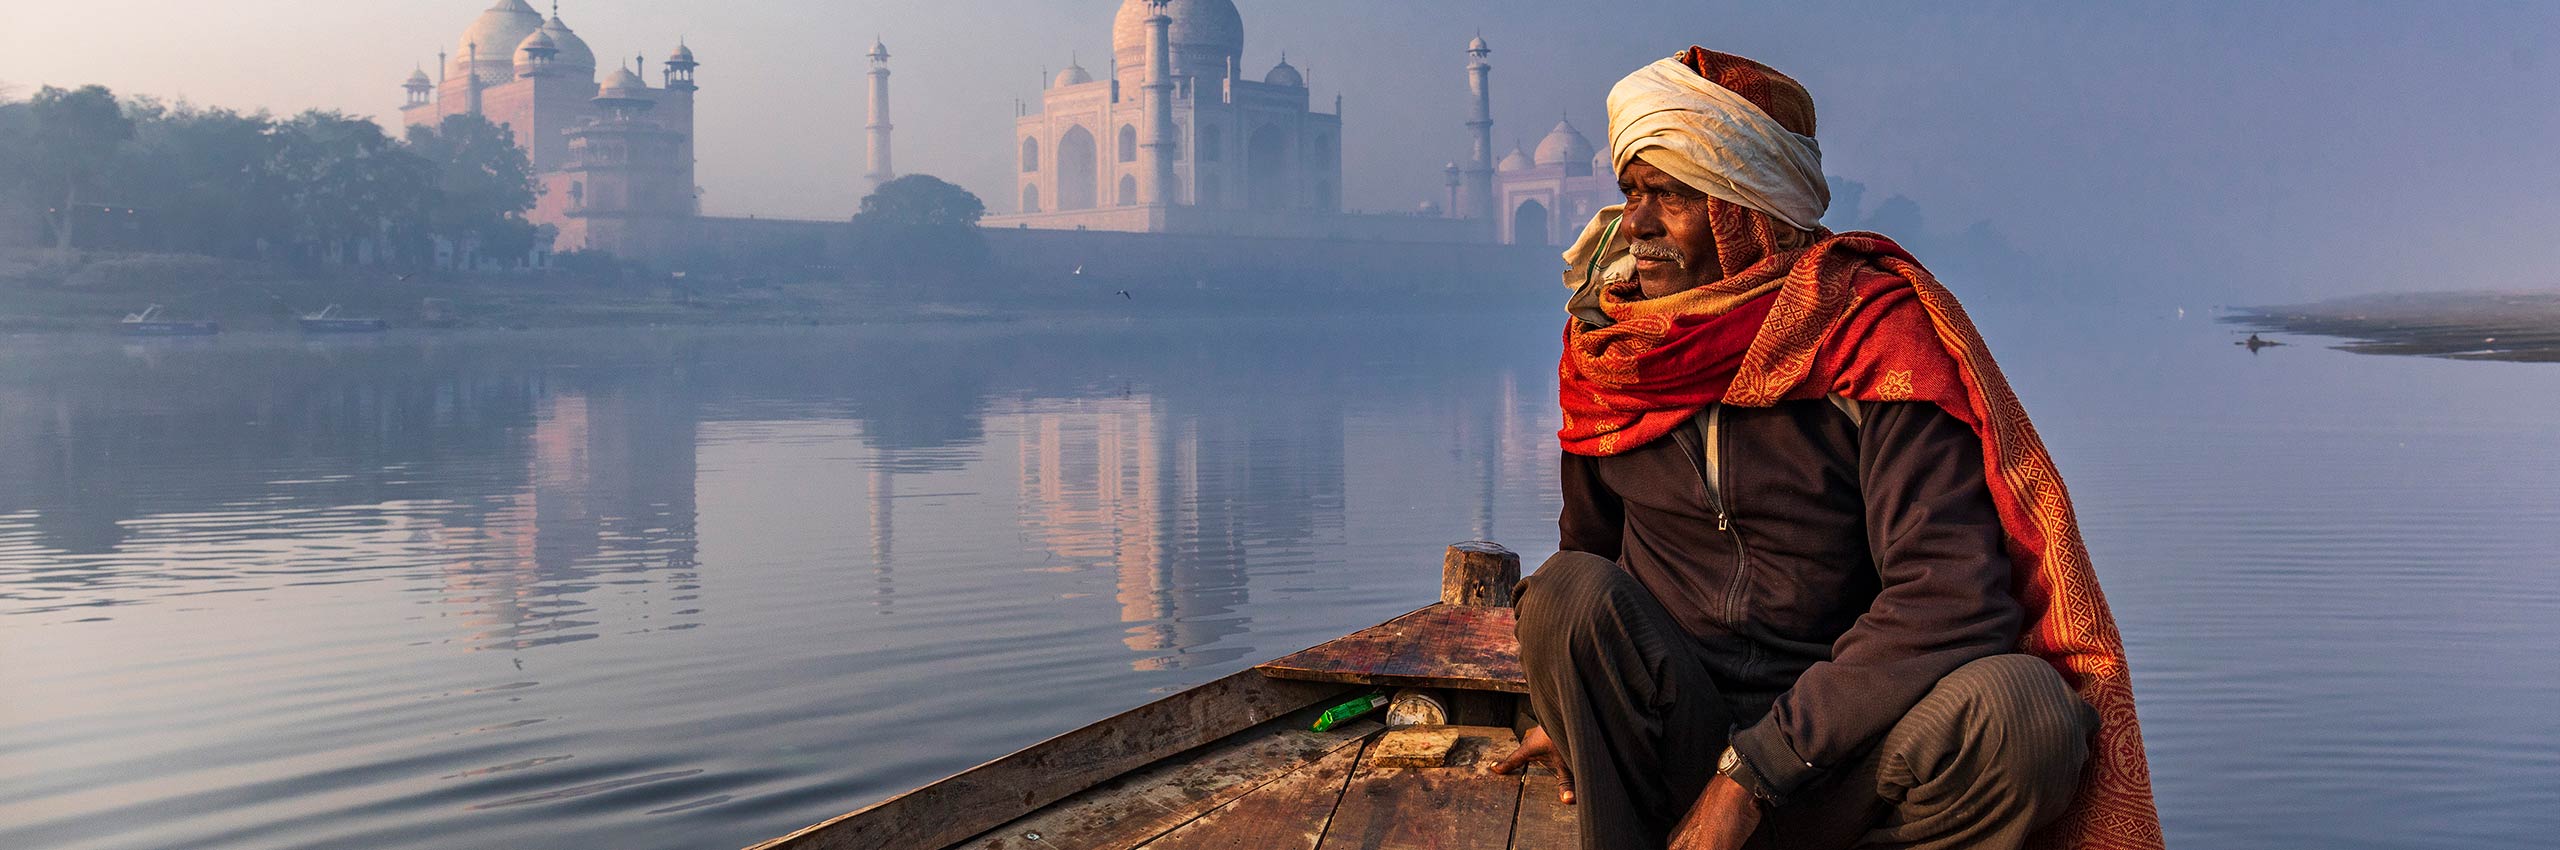 SIM-515774 | India/Uttar Pradesh, Agra, Taj Mahal | © Luigi Vaccarella/4Corners